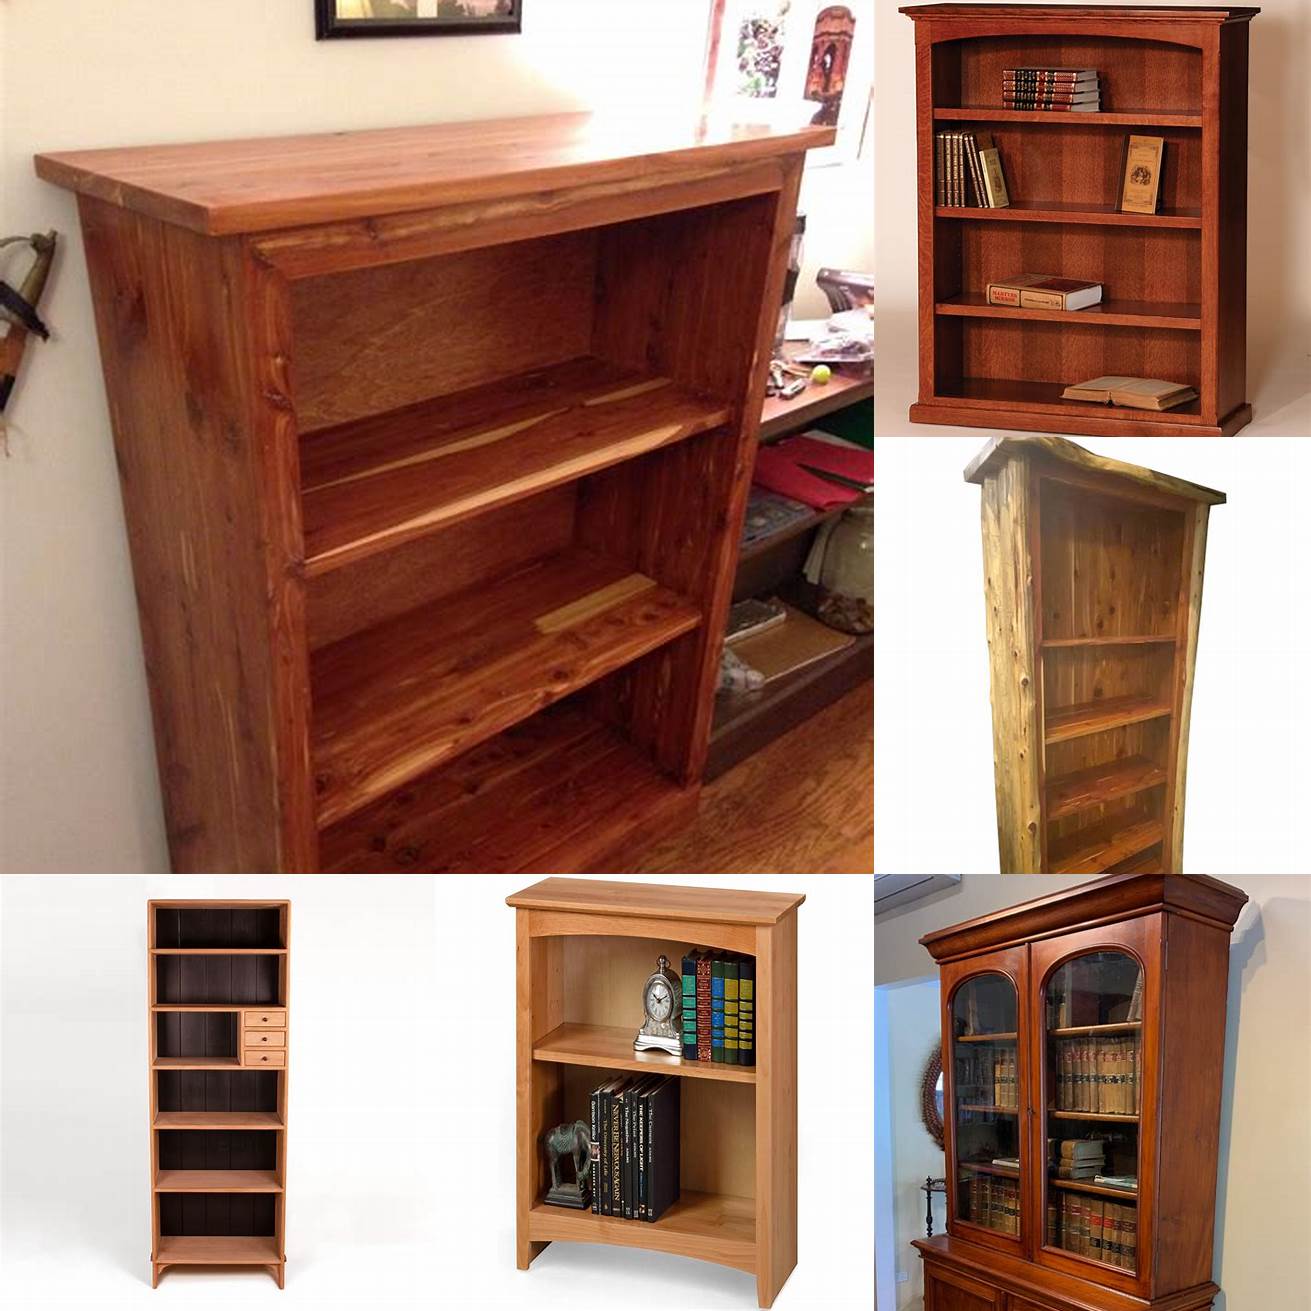 Cedar bookcase